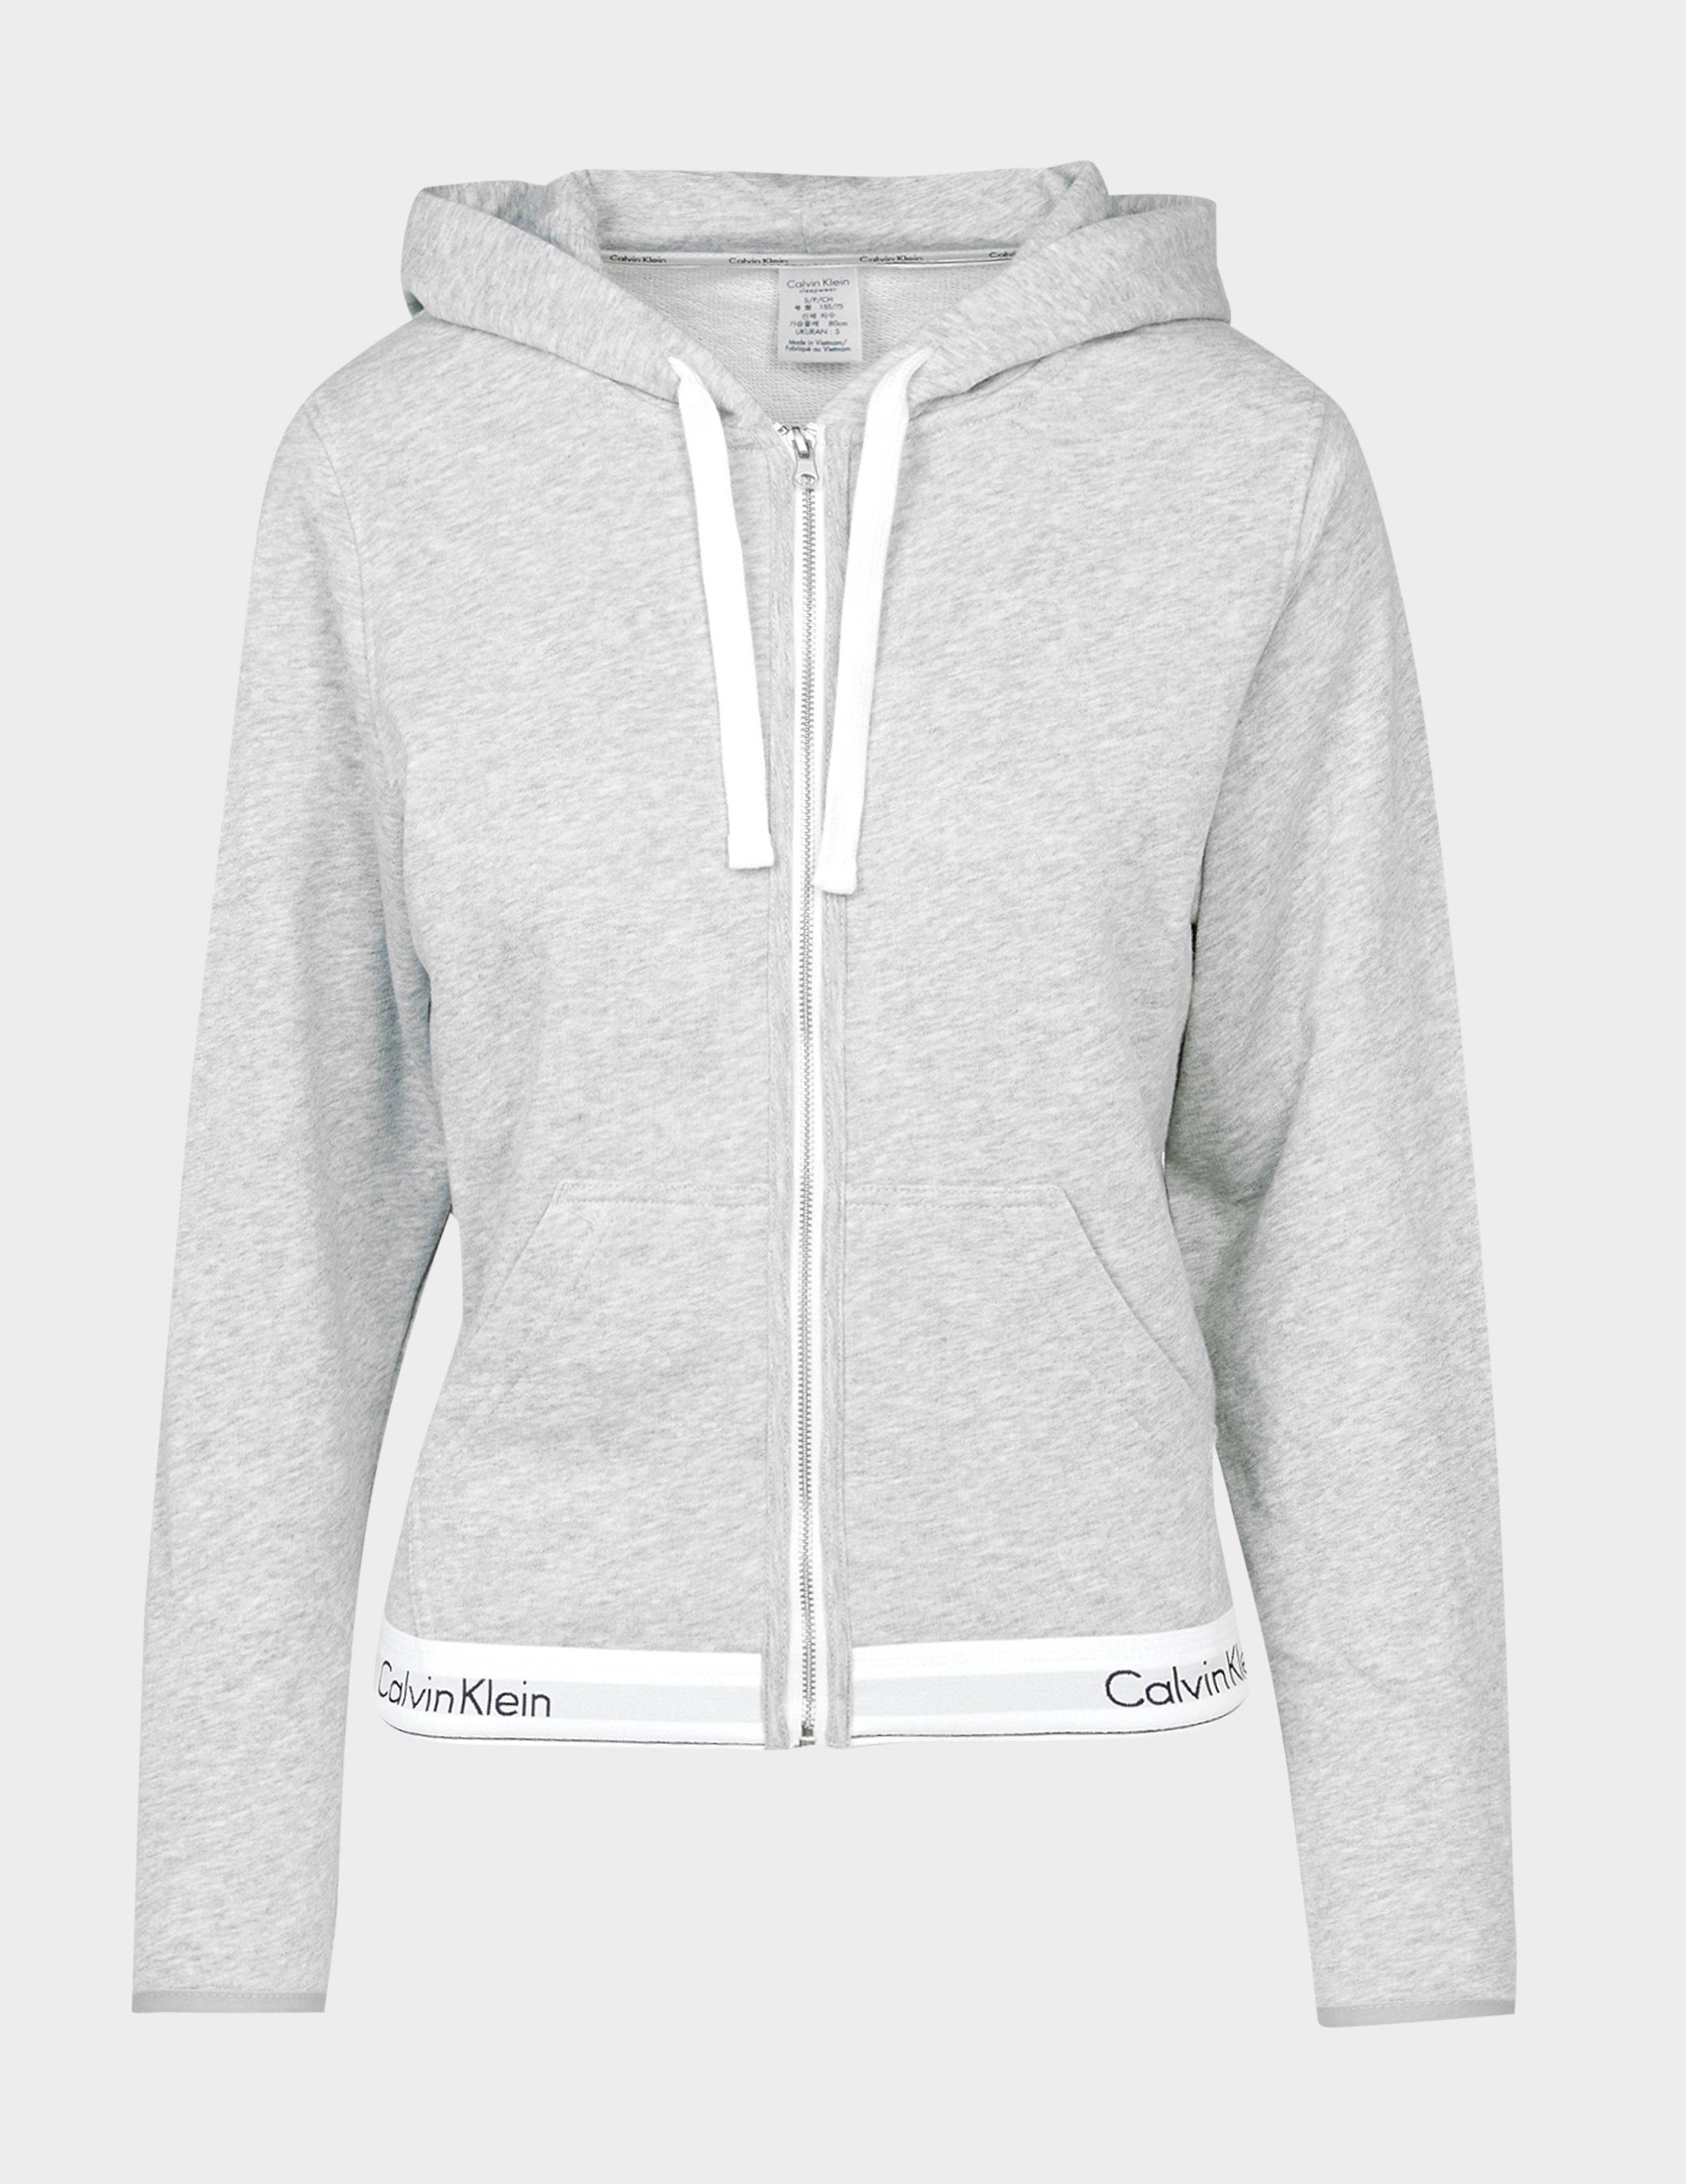 grey calvin klein zip hoodie